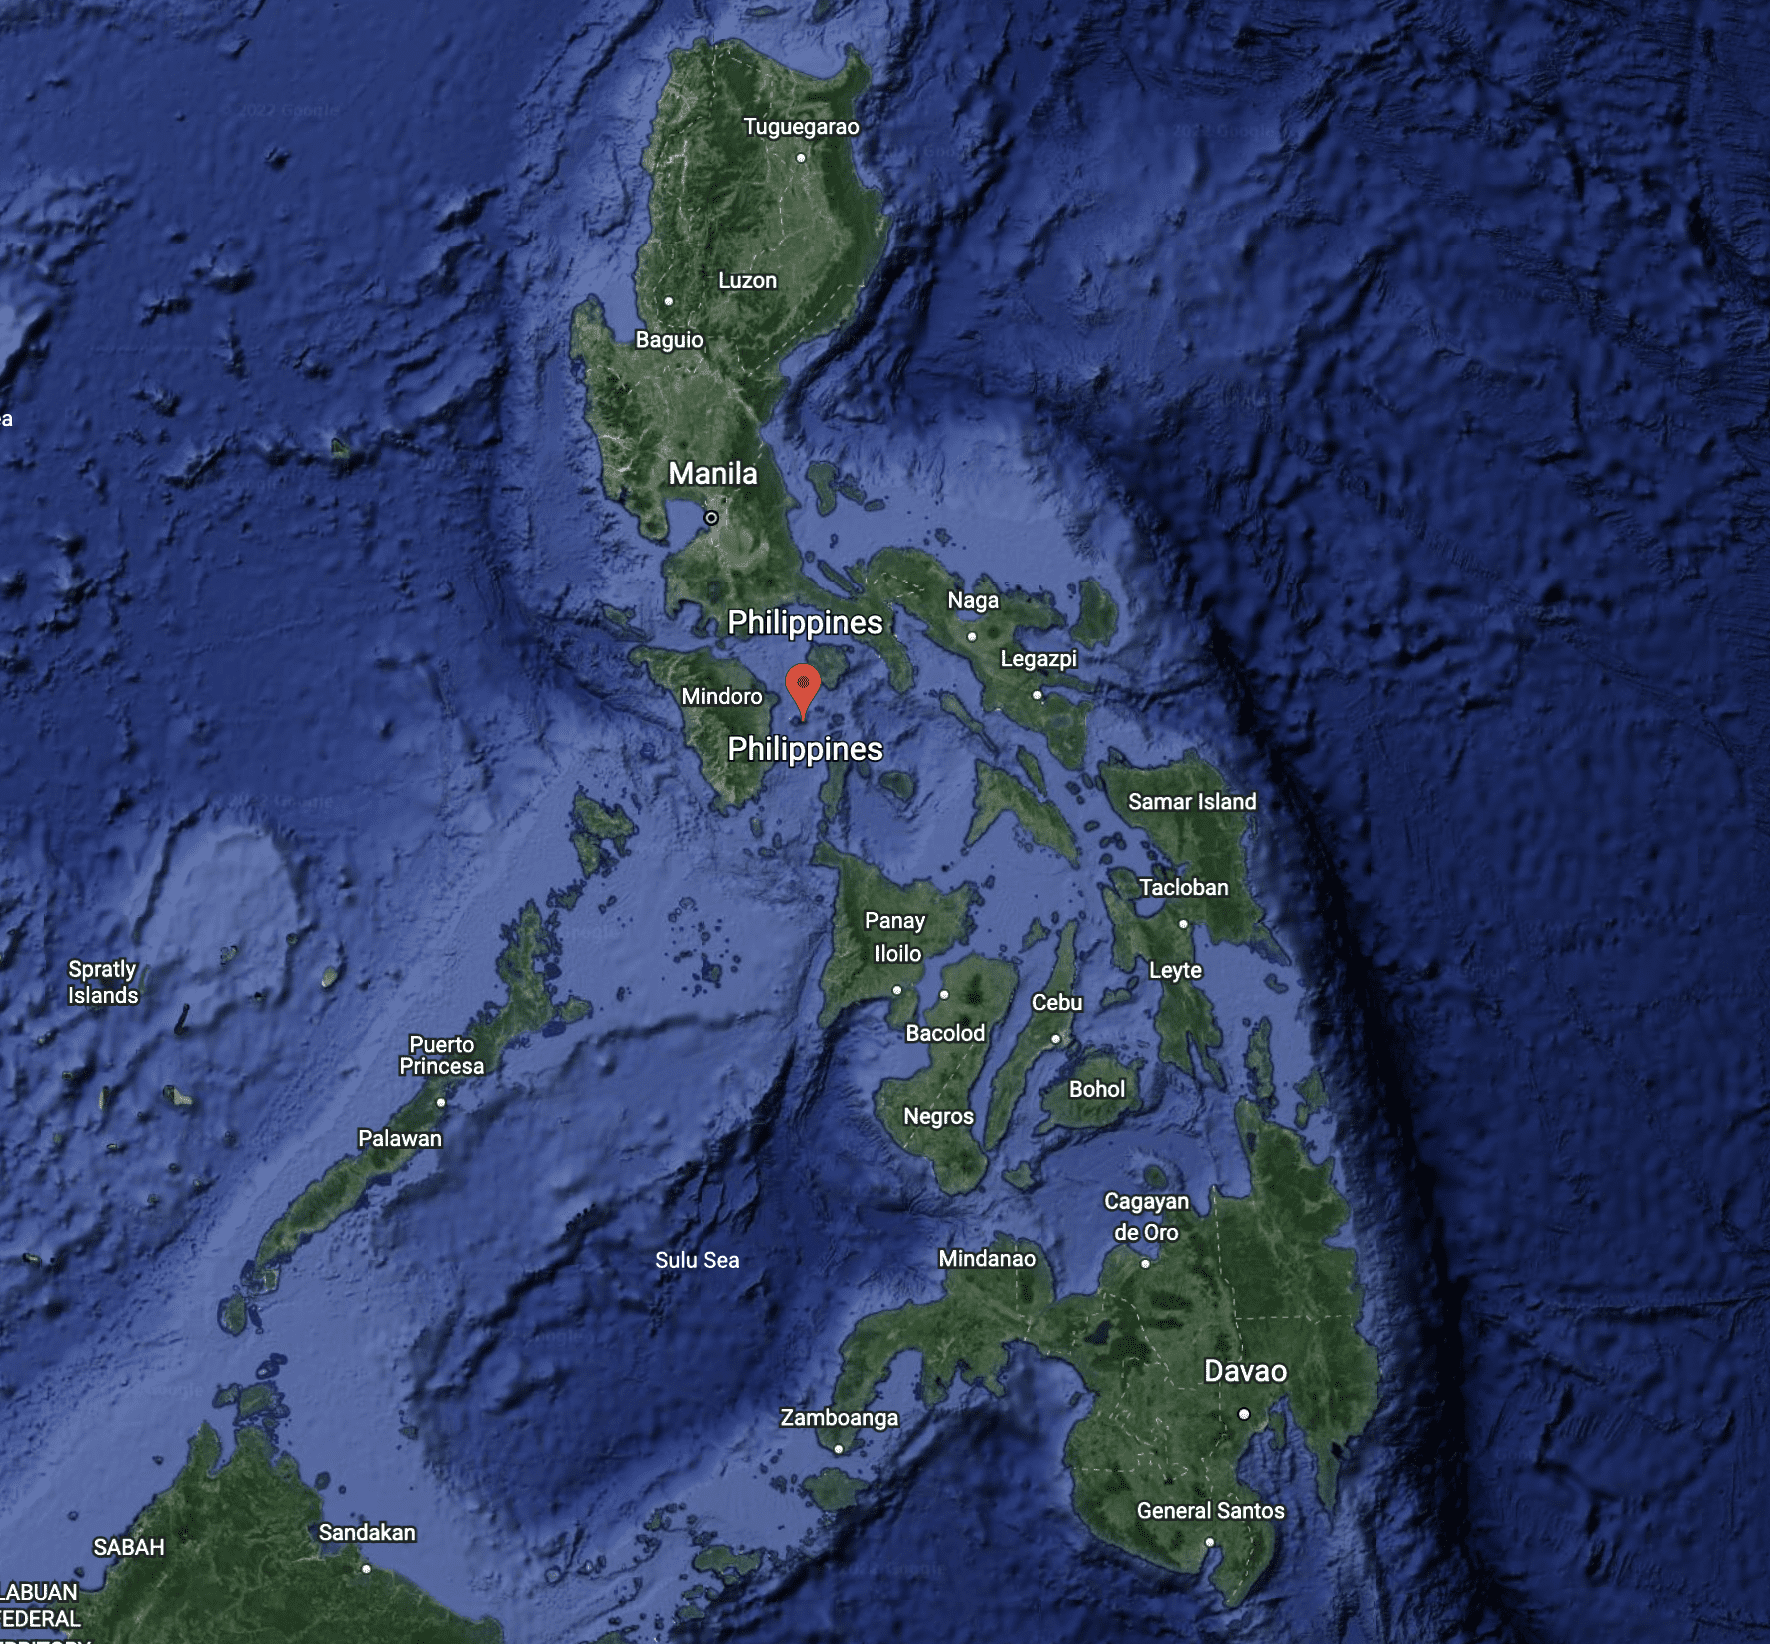 Google Earth Satellite Image of Phillipines